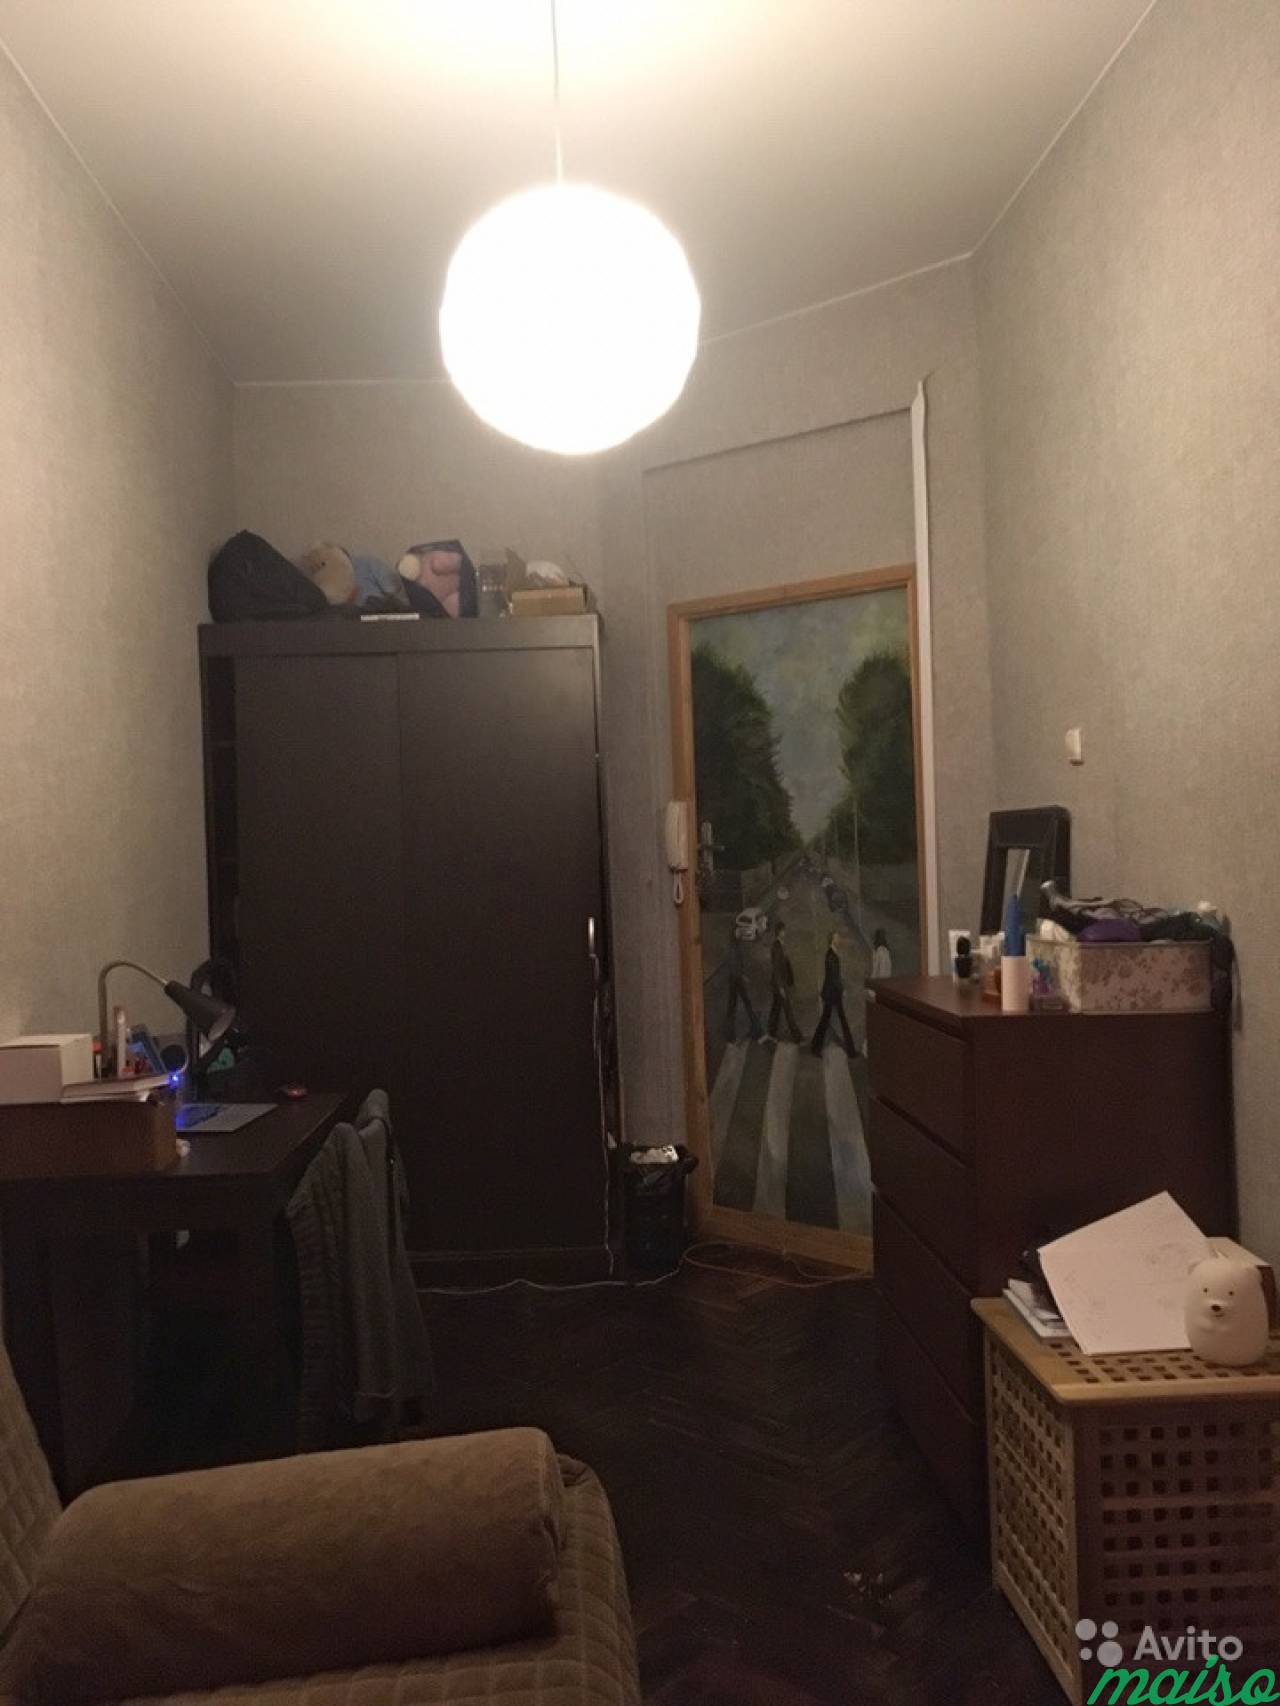 Комната 11 м² в 5-к, 4/5 эт. в Санкт-Петербурге. Фото 3